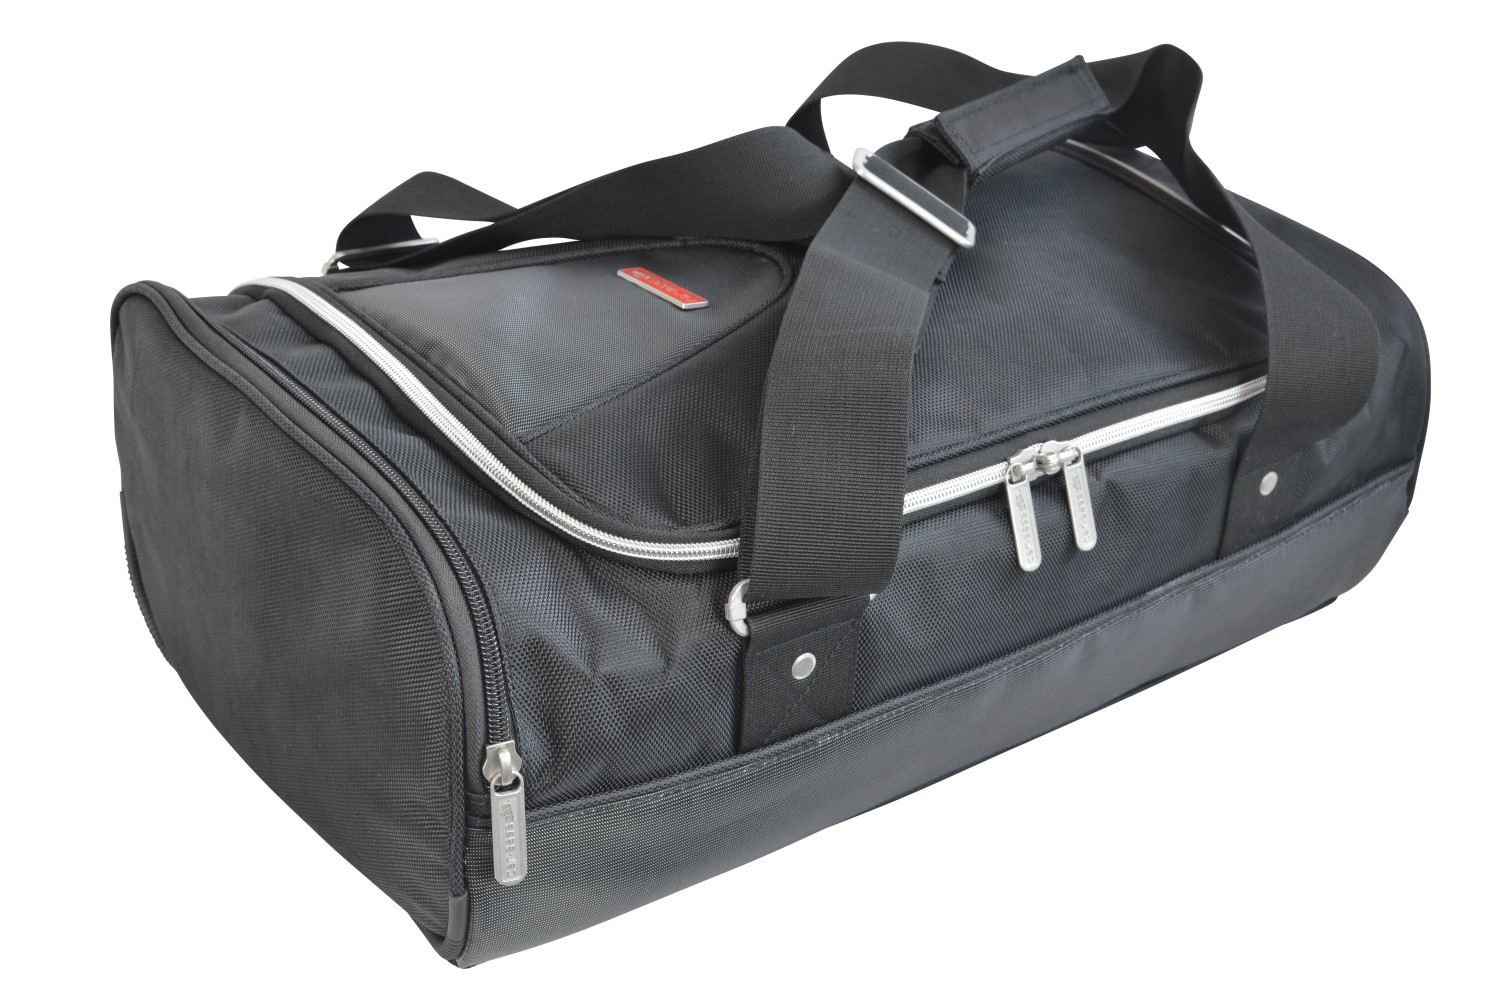 Travel bag - 32x20x70 cm (W x H x L)